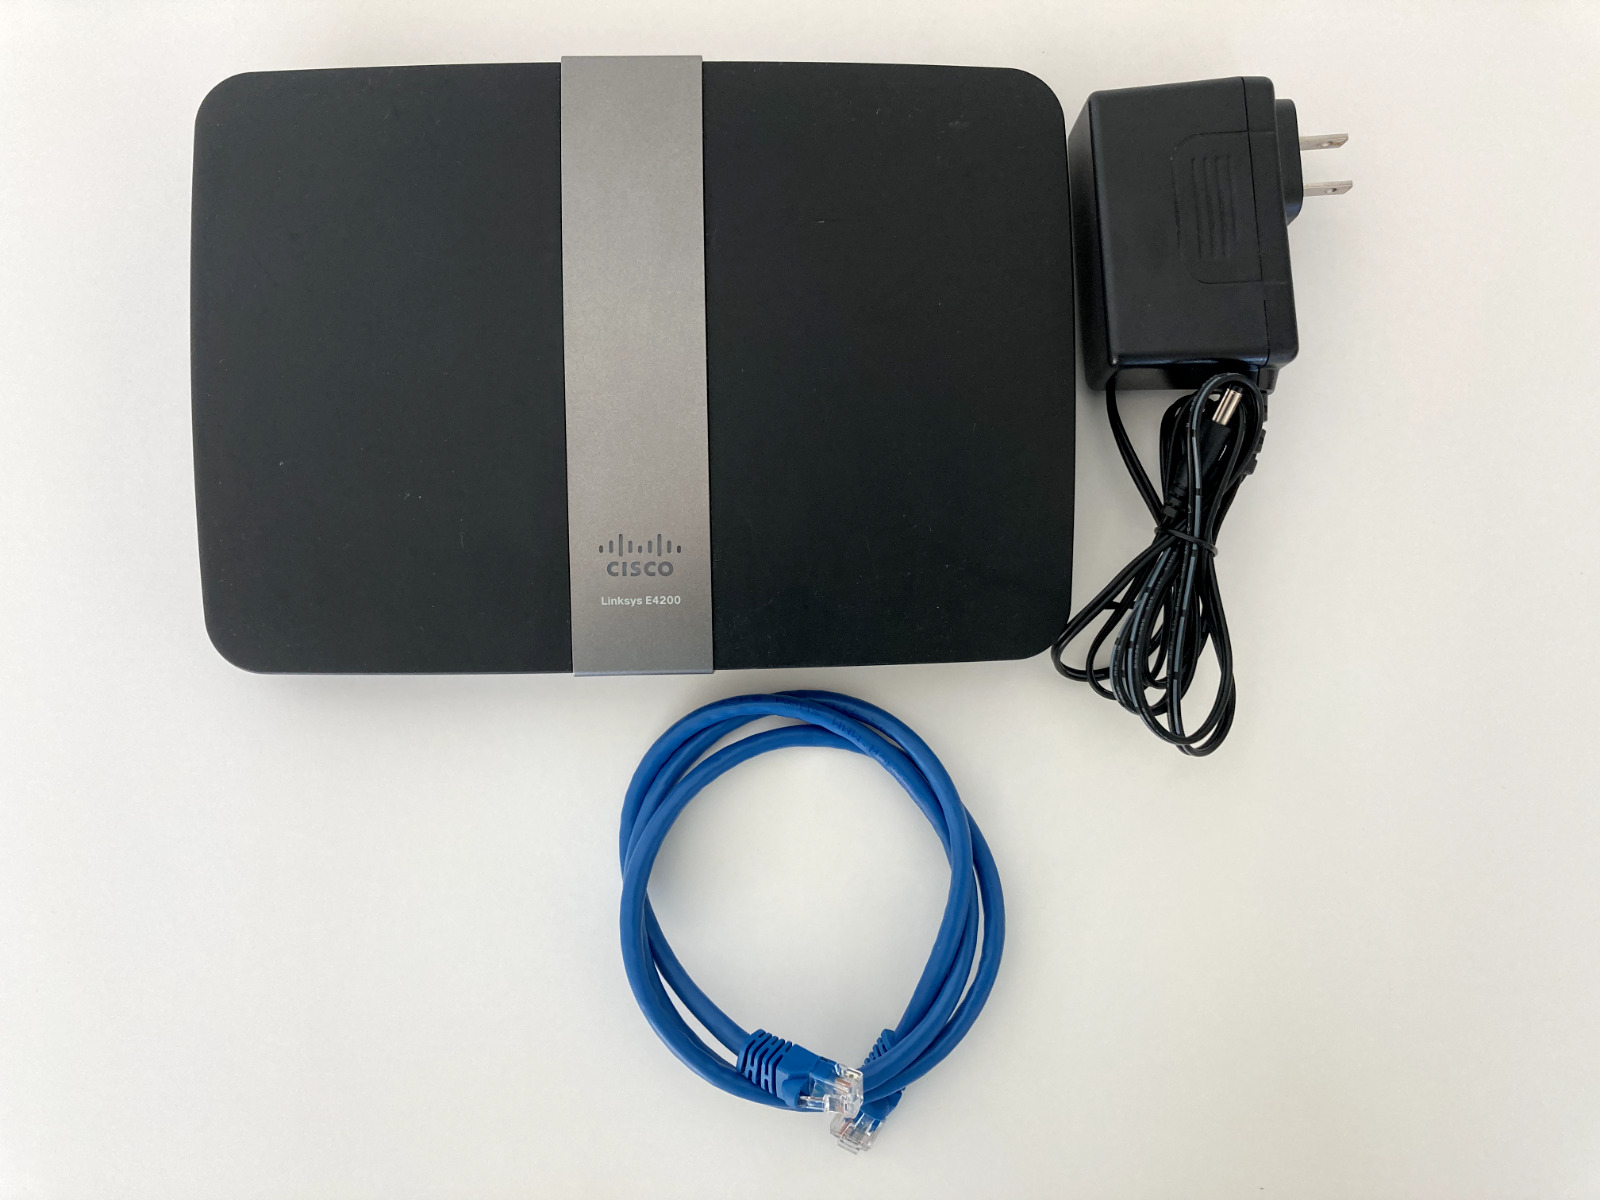 Cisco Linksys E4200 Dual Band N Router, 4x LAN, 1x WAN